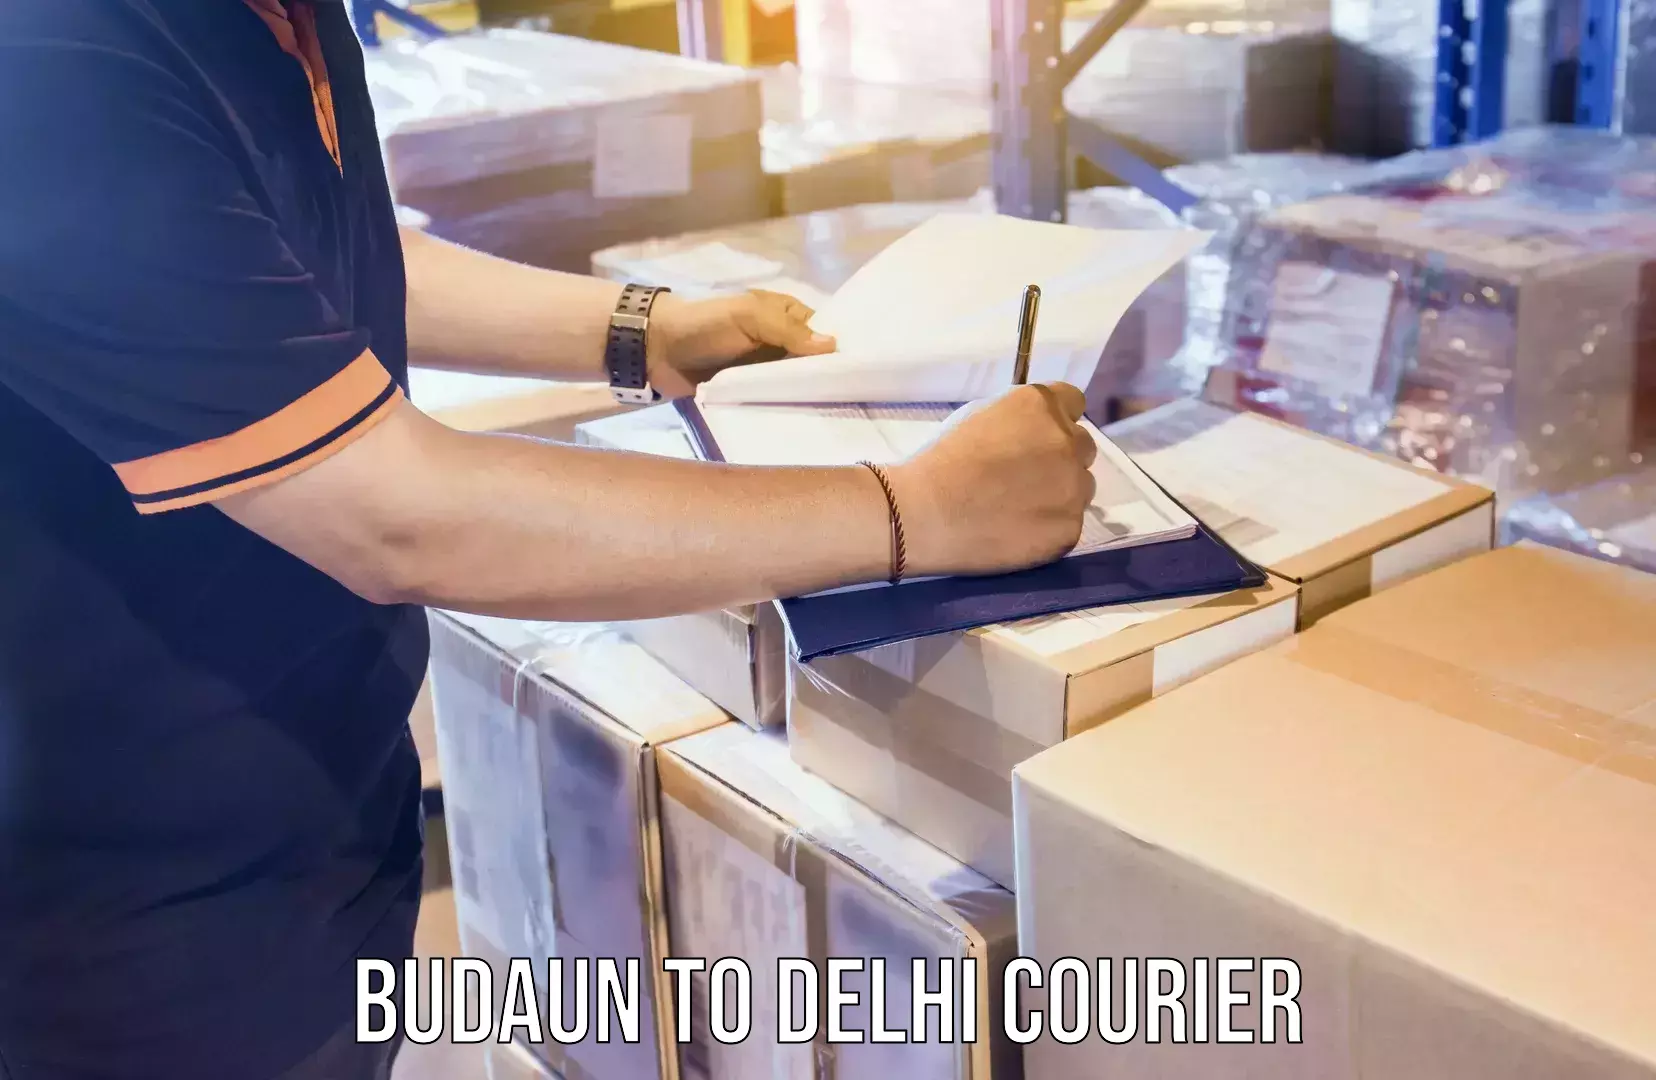 Courier service innovation Budaun to Delhi